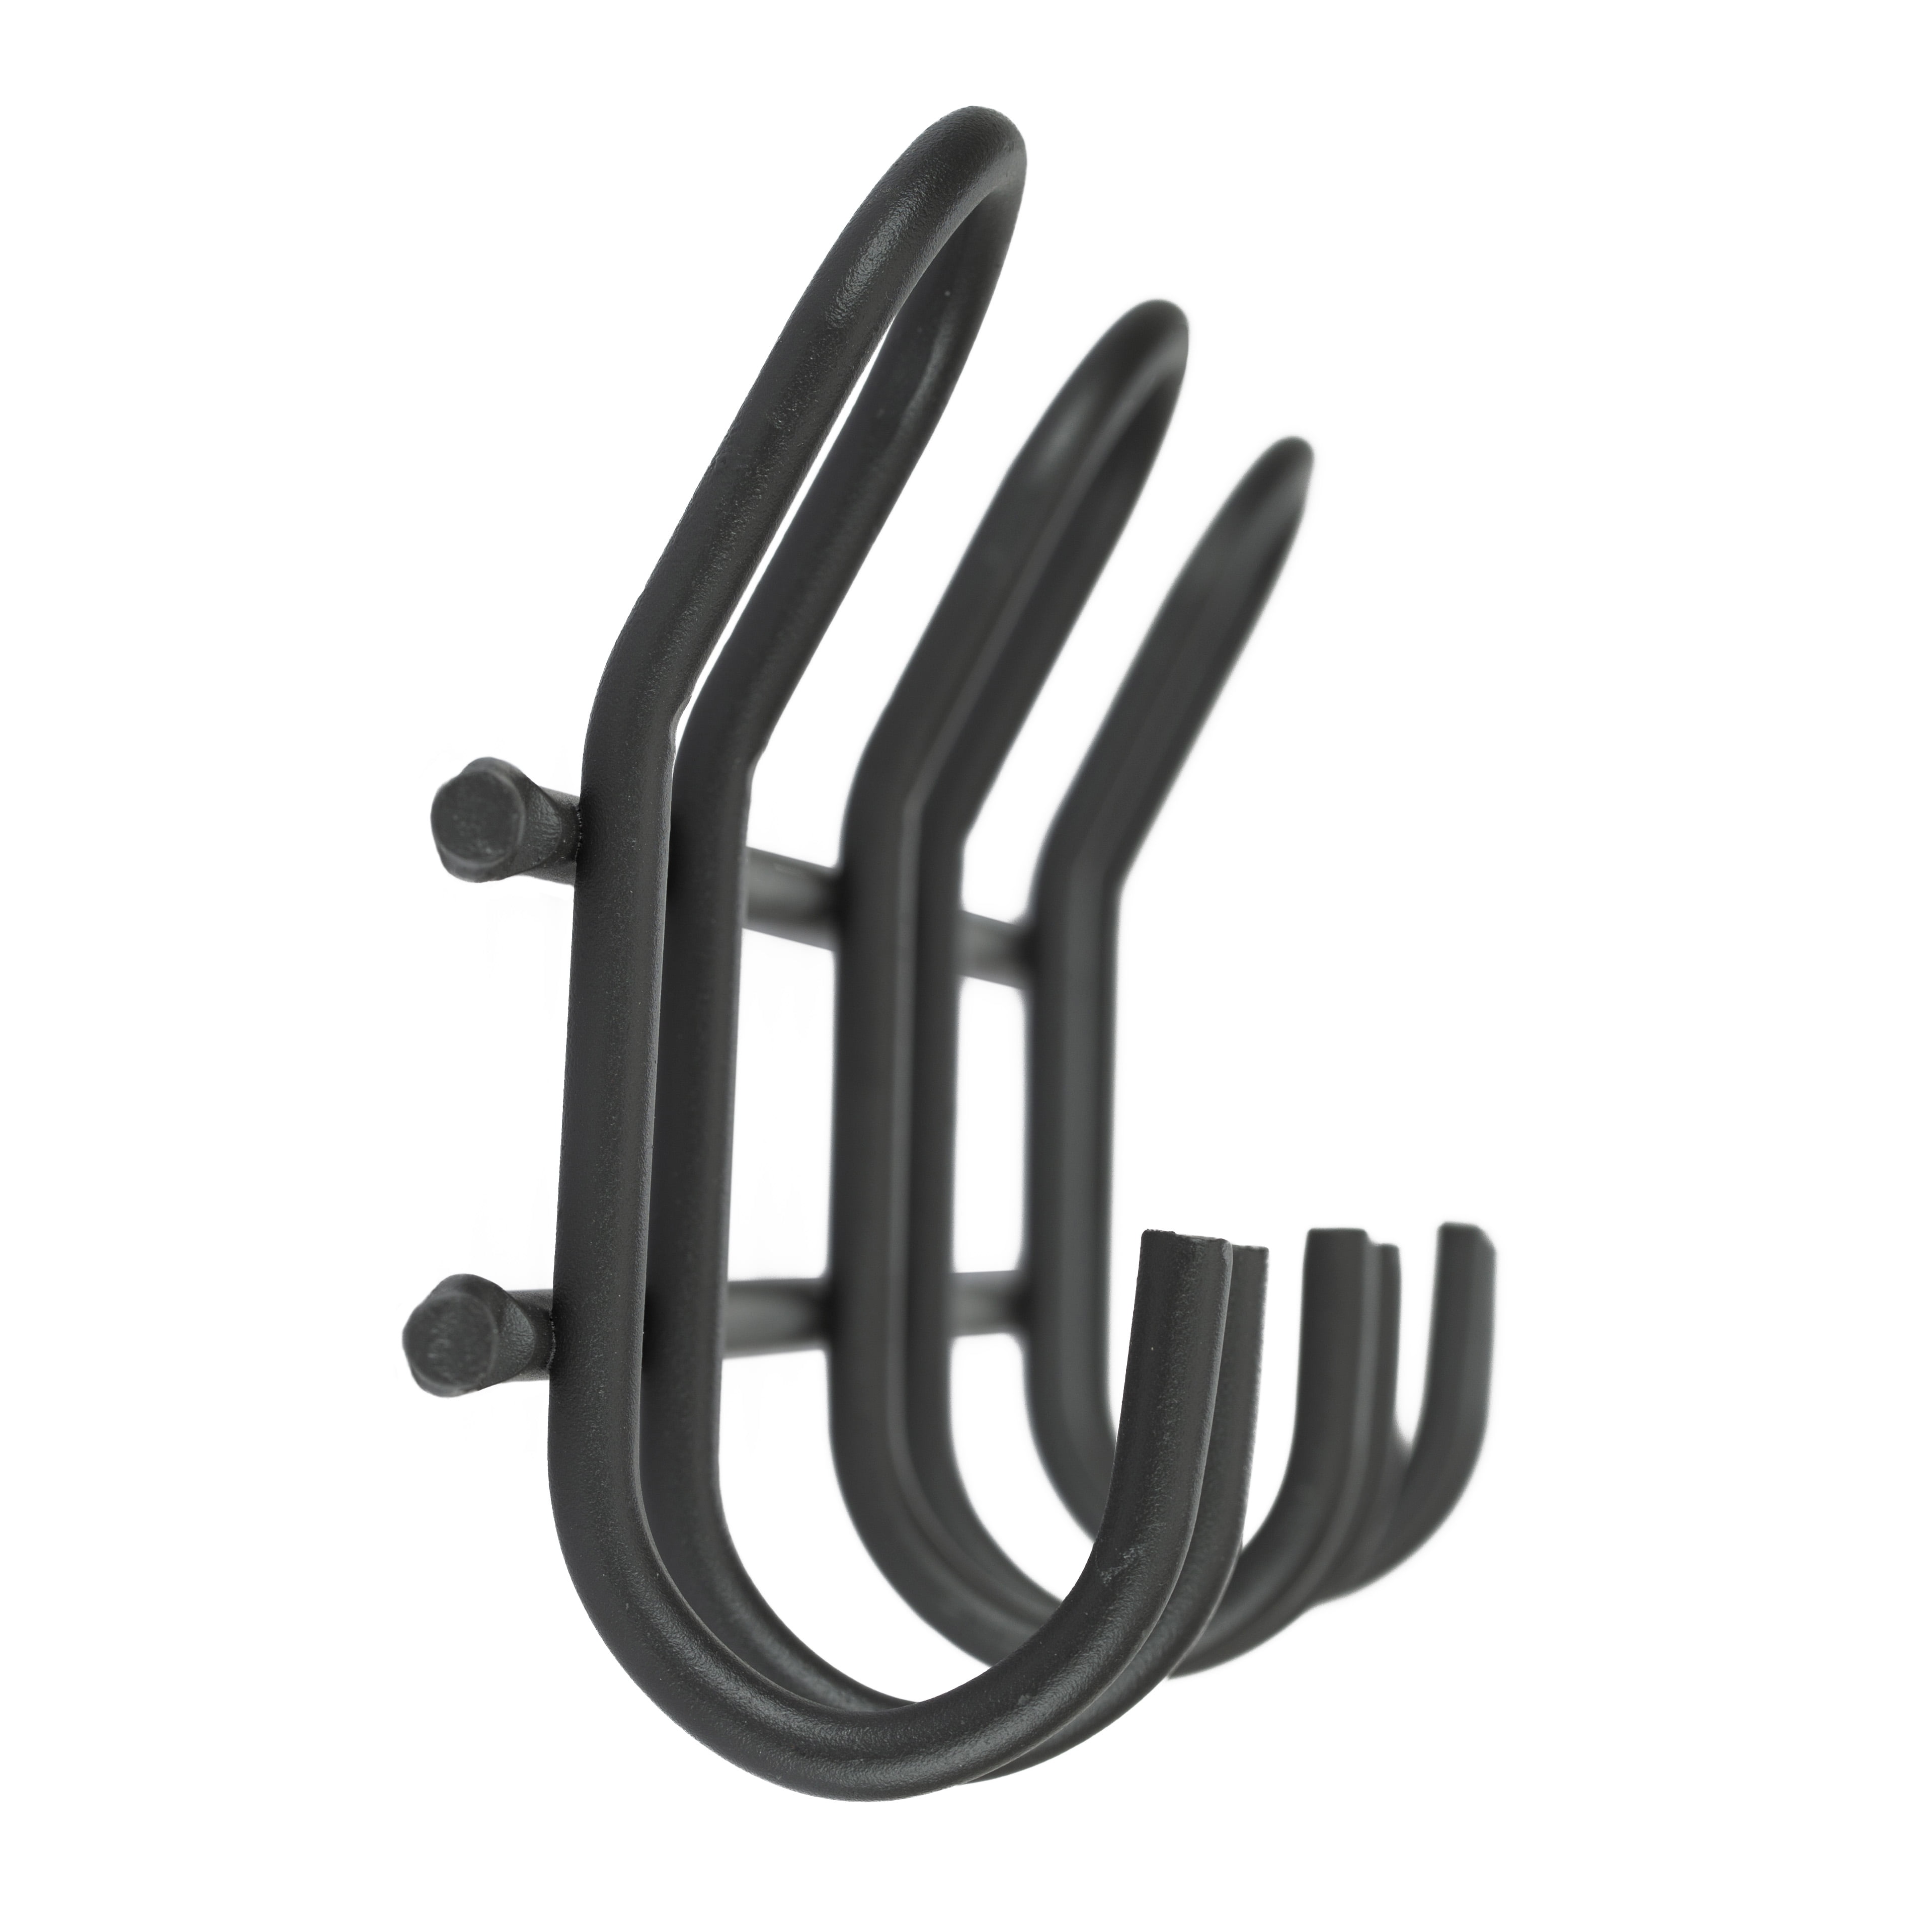 Everline Multi - Alloy Steel Functional Steel Over The Door Hook Hanger  Organizer/Wall Hook Rack - Black (7 Hook)